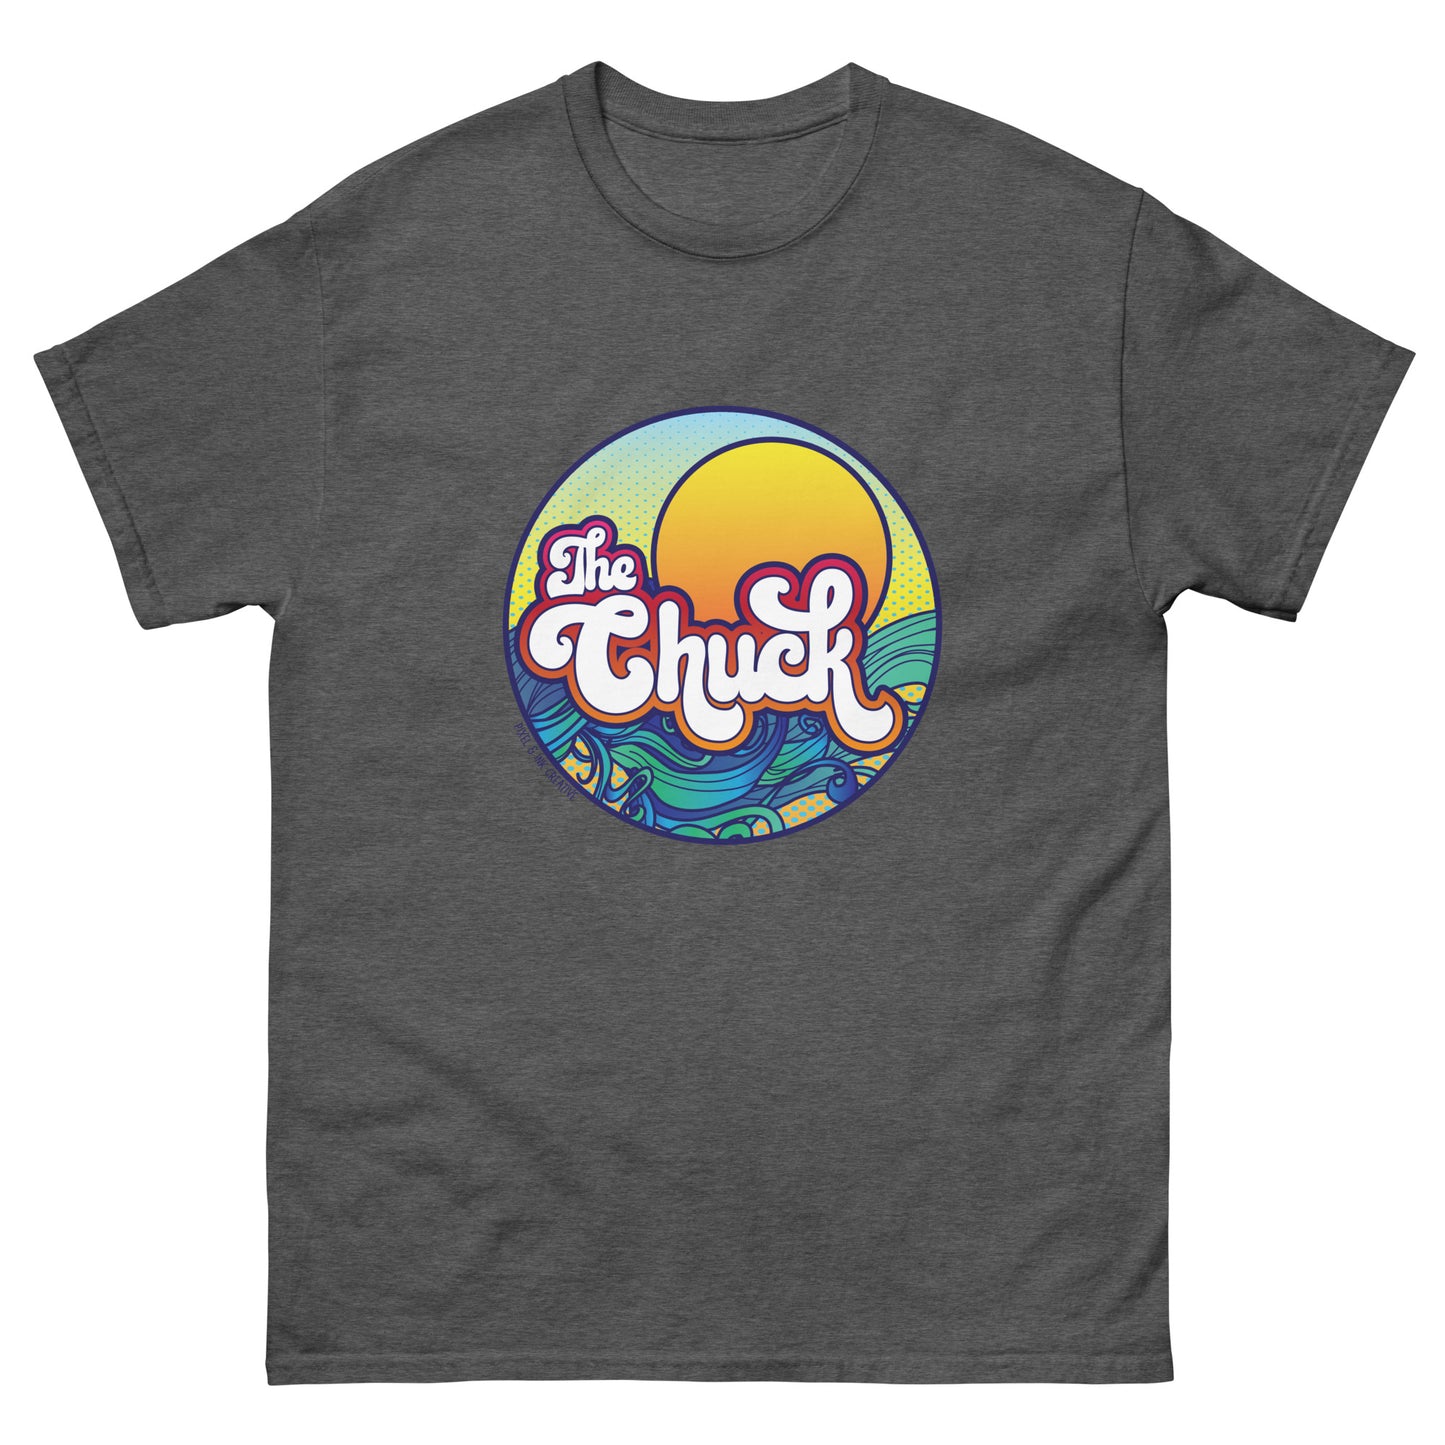 The Chuck - Lake Charles Shirt